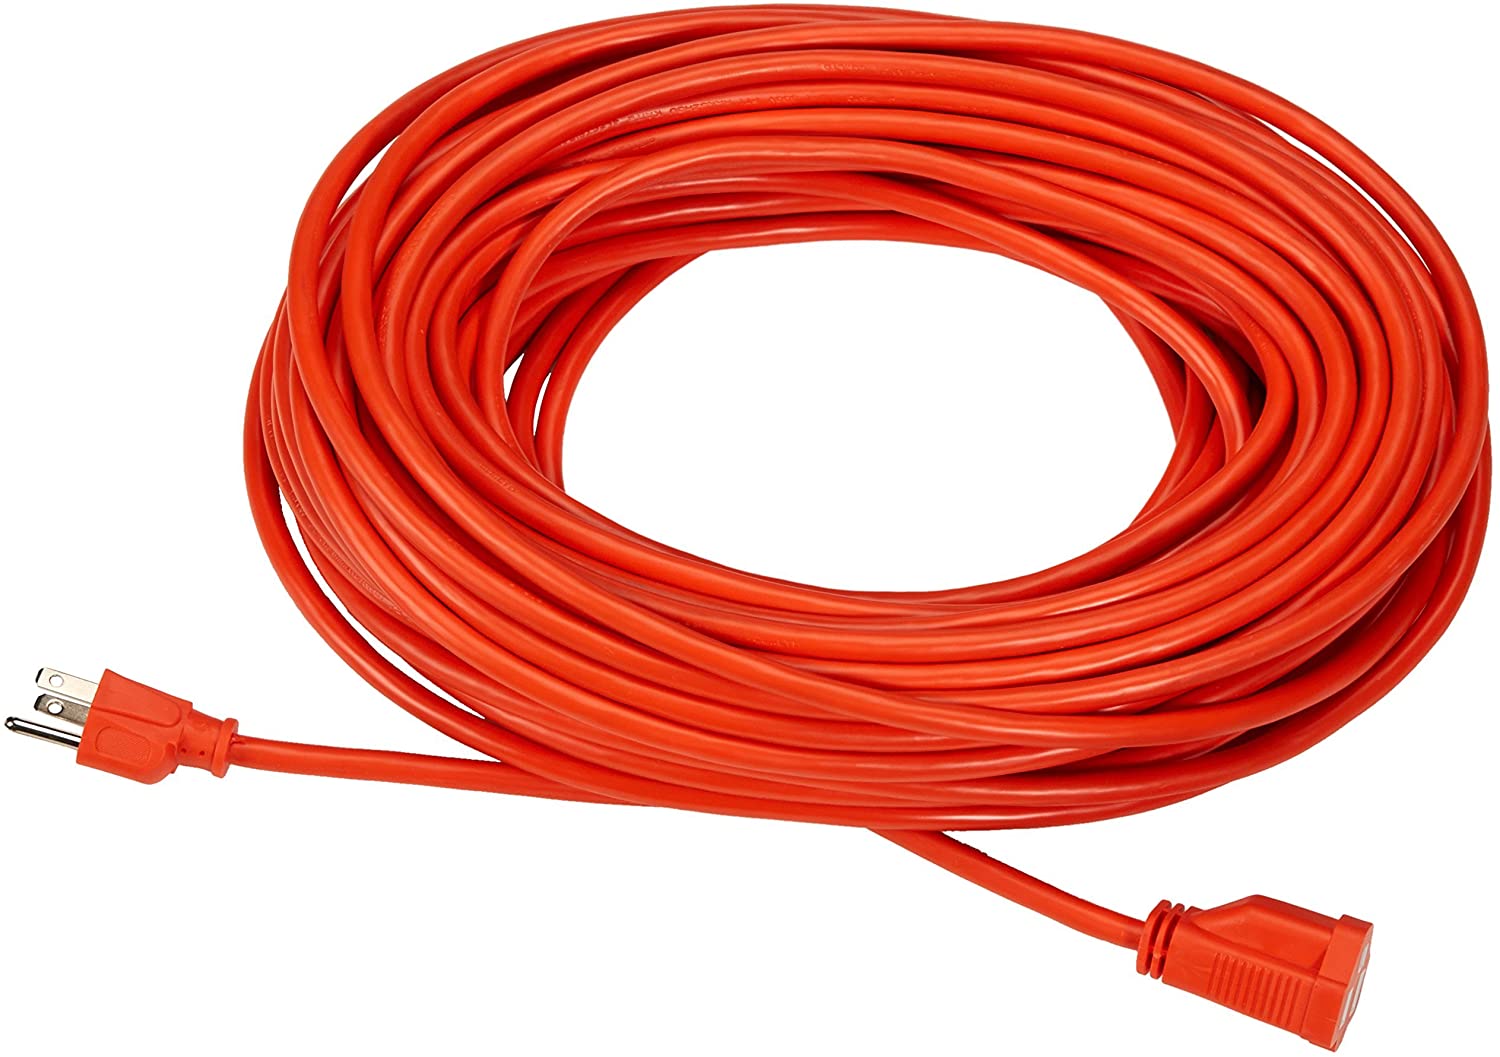 AmazonBasics All-Copper Extension Cord, 100-Feet